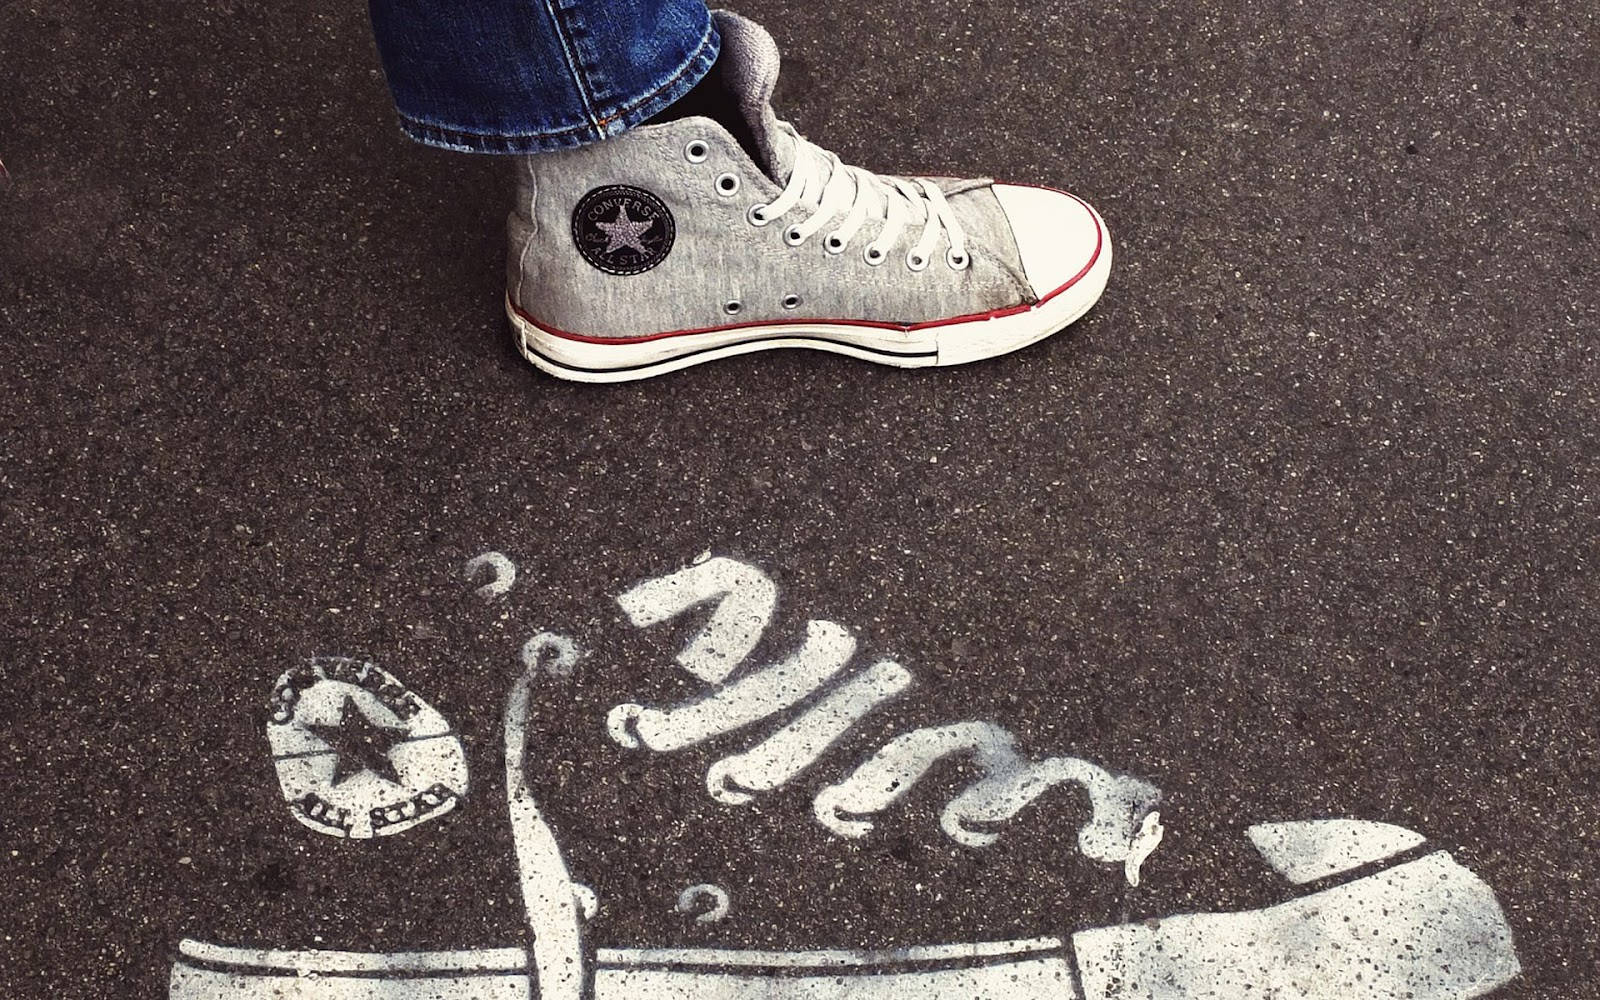 Caption: Stylish Converse Sneaker Artwork On Chalkboard Background Background